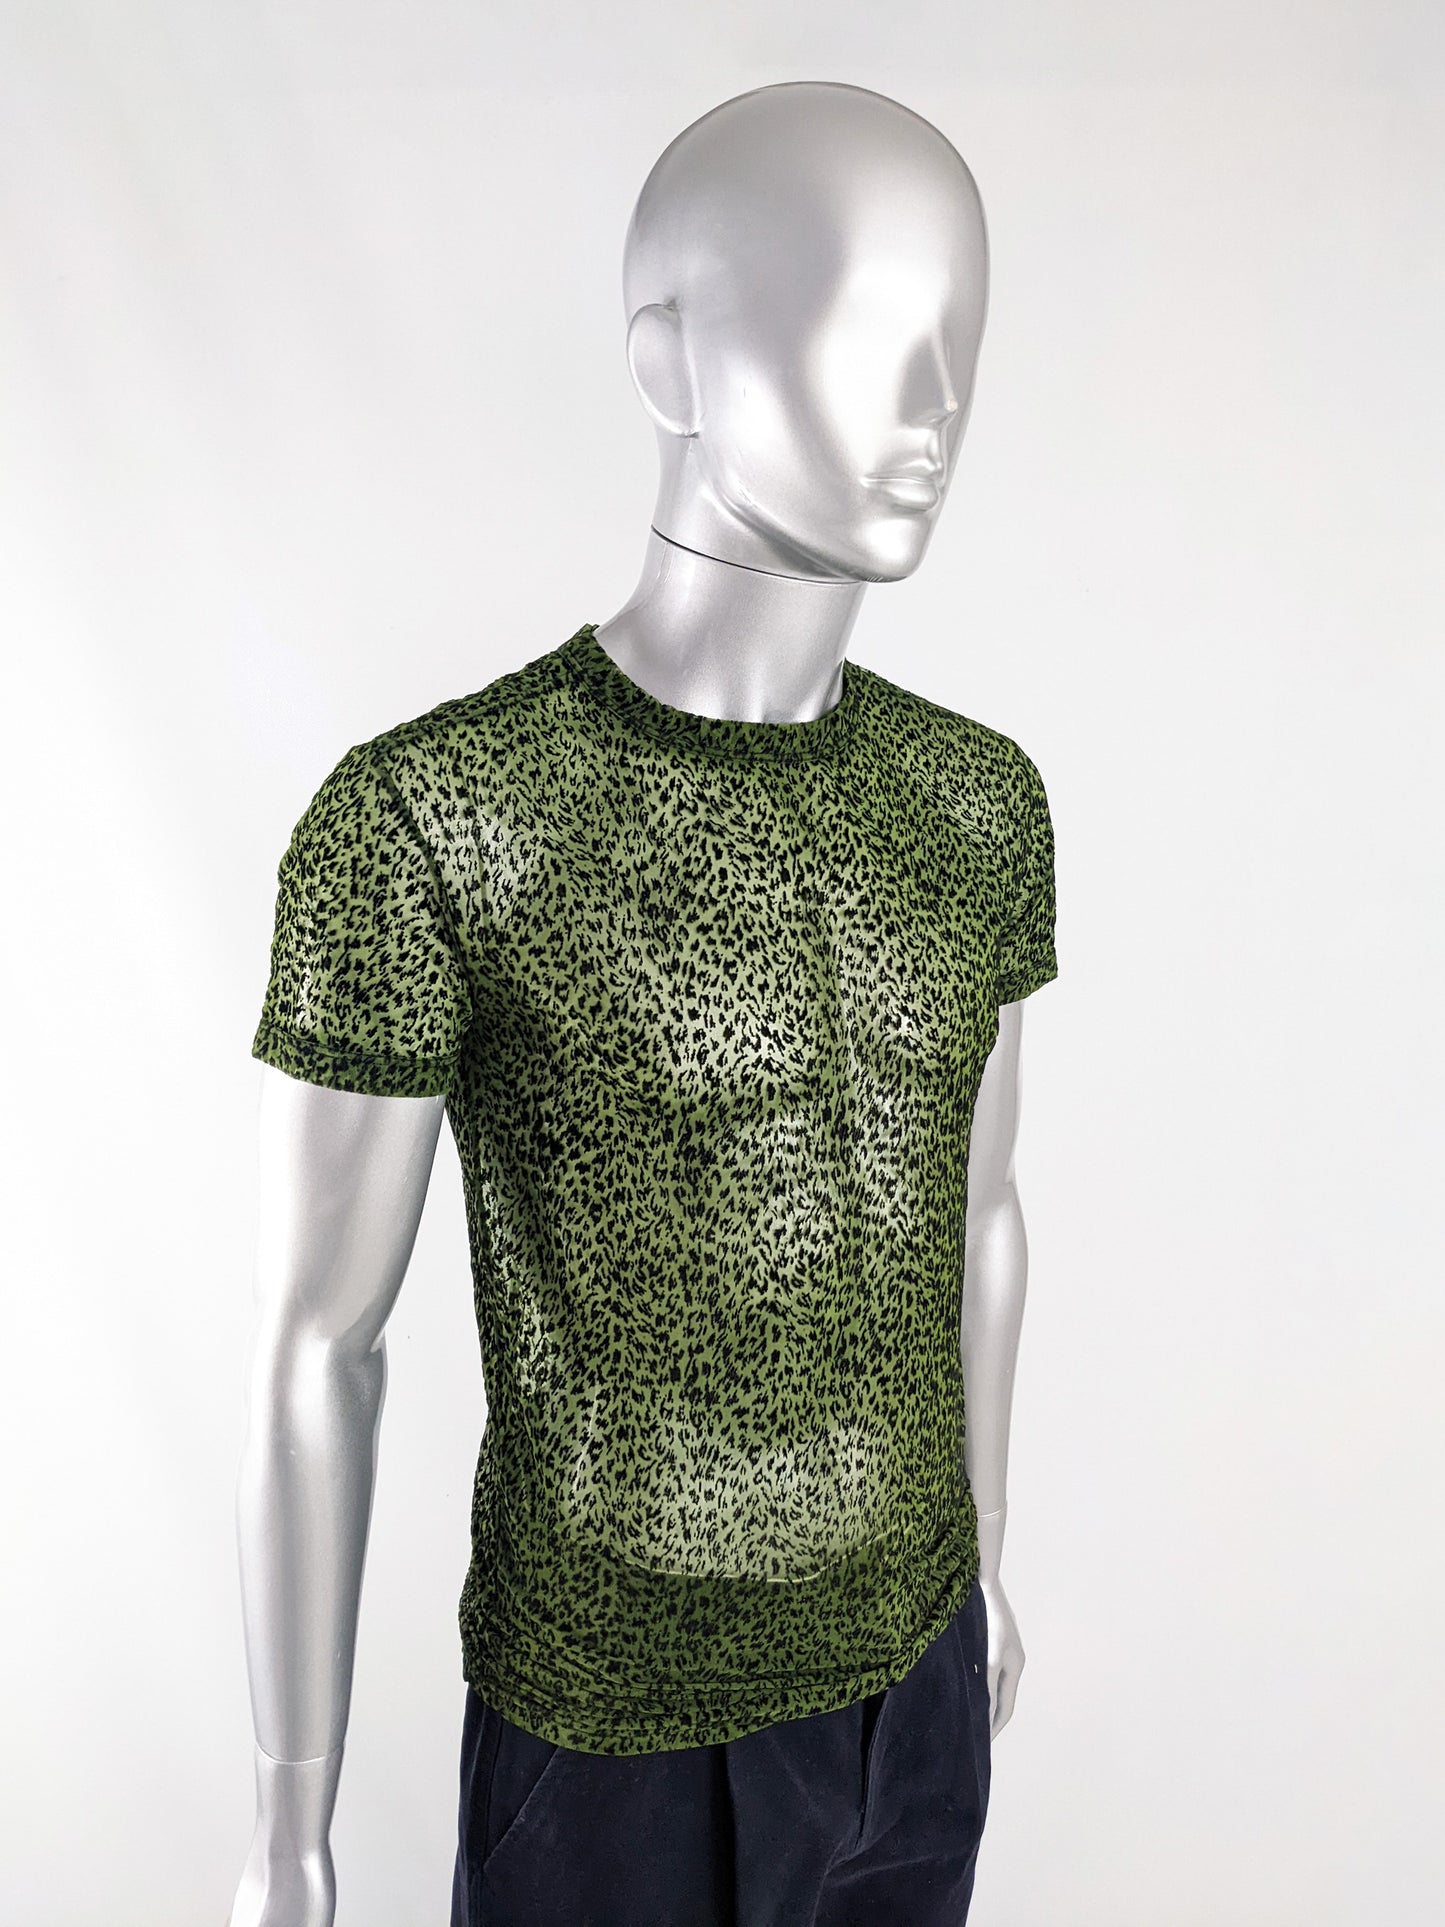 Gianni Versace Versus Vintage Mens Green Sheer Mesh Shirt, 1990s